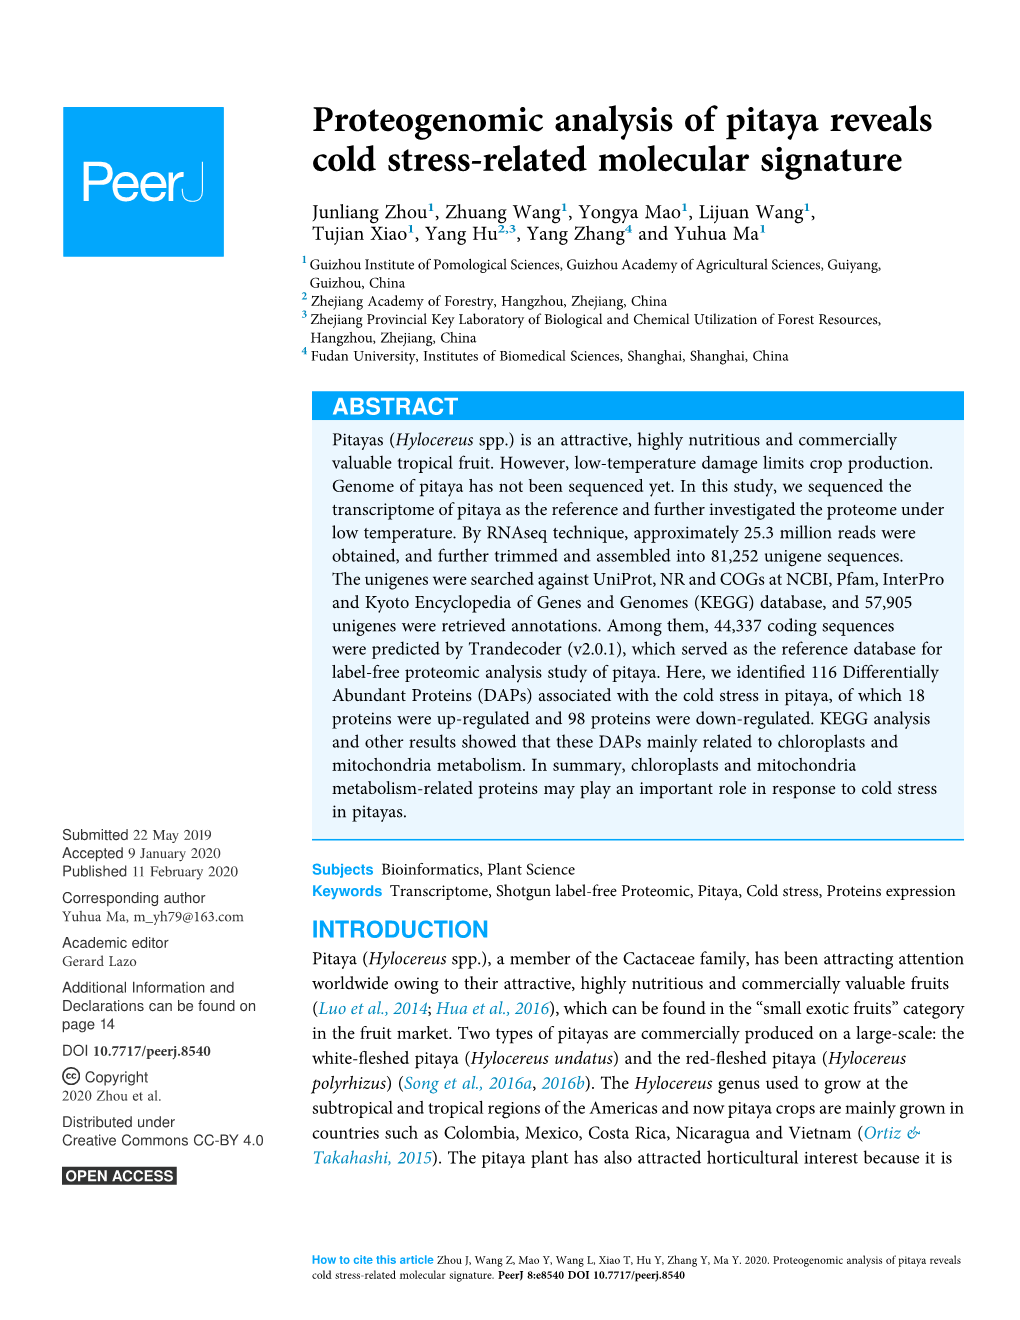 Proteogenomic Analysis of Pitaya Reveals Cold Stress-Related Molecular Signature